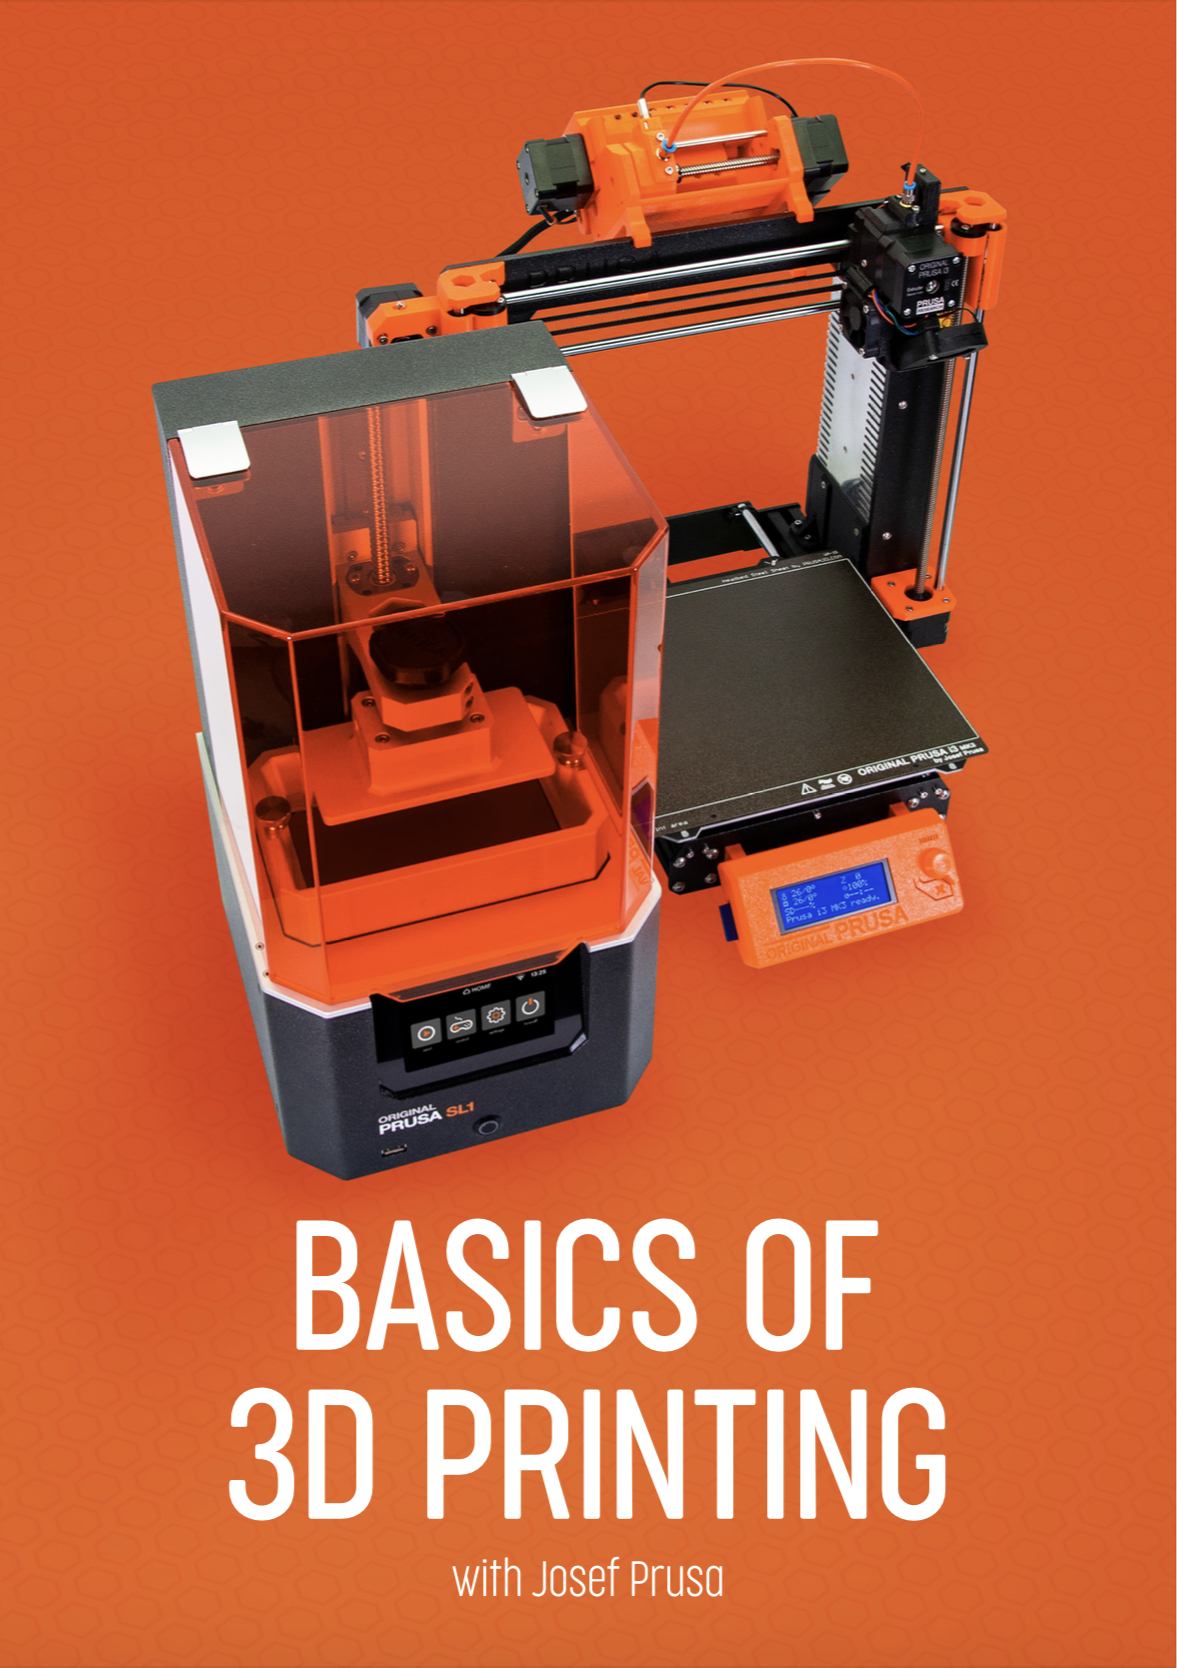 Martin Bach, Josef Průša: Basics of 3D Printing with Josef Prusa (EBook, Prusa Research)